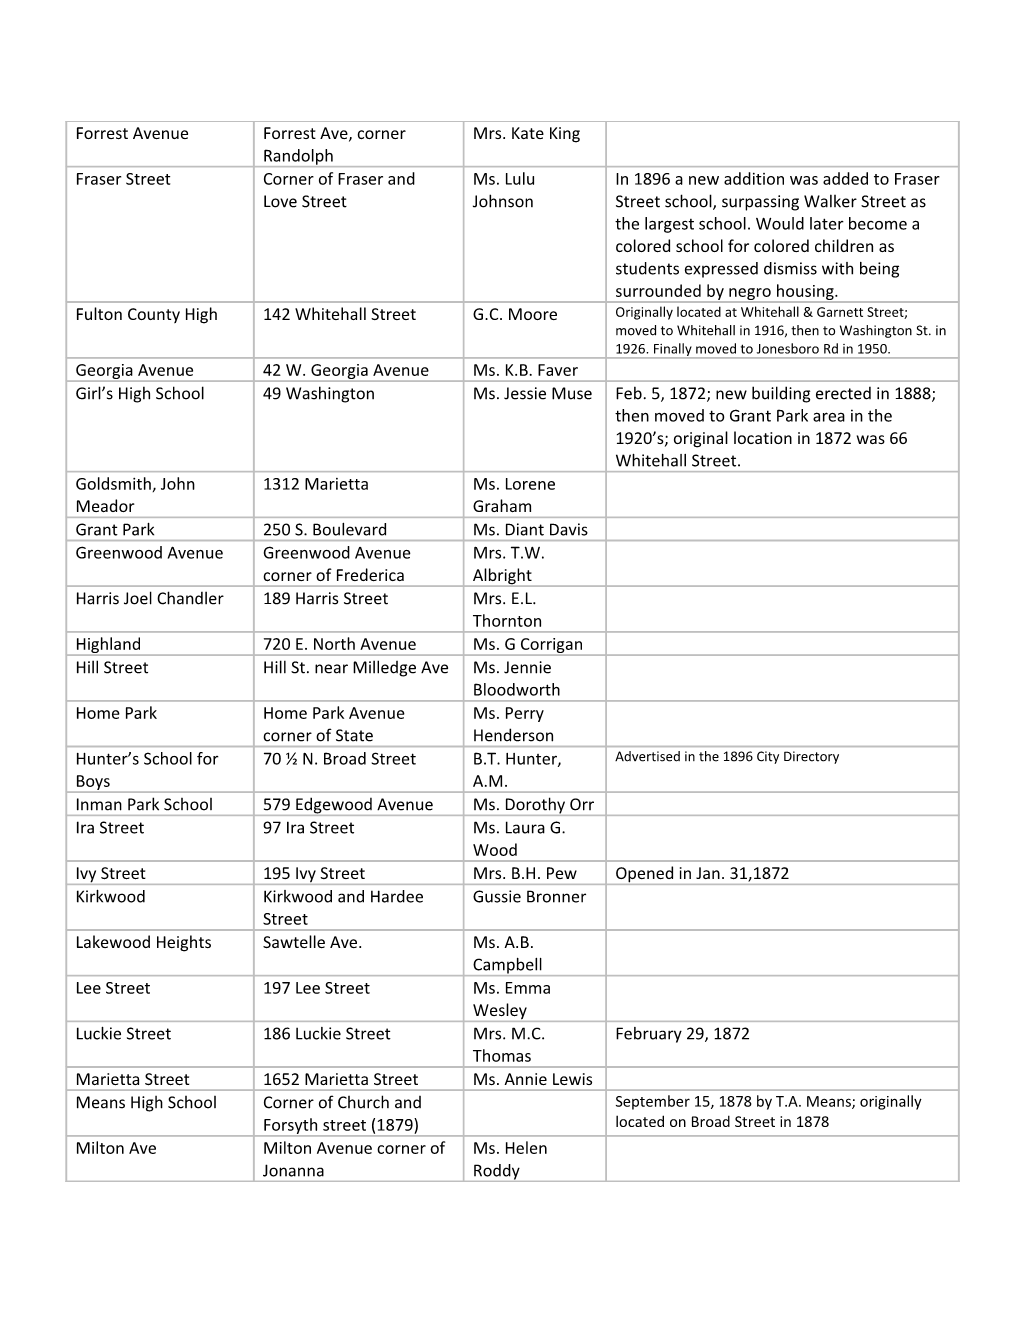 List of APS Schools According to the ATLANTA CITY DIRECTORY of 1923